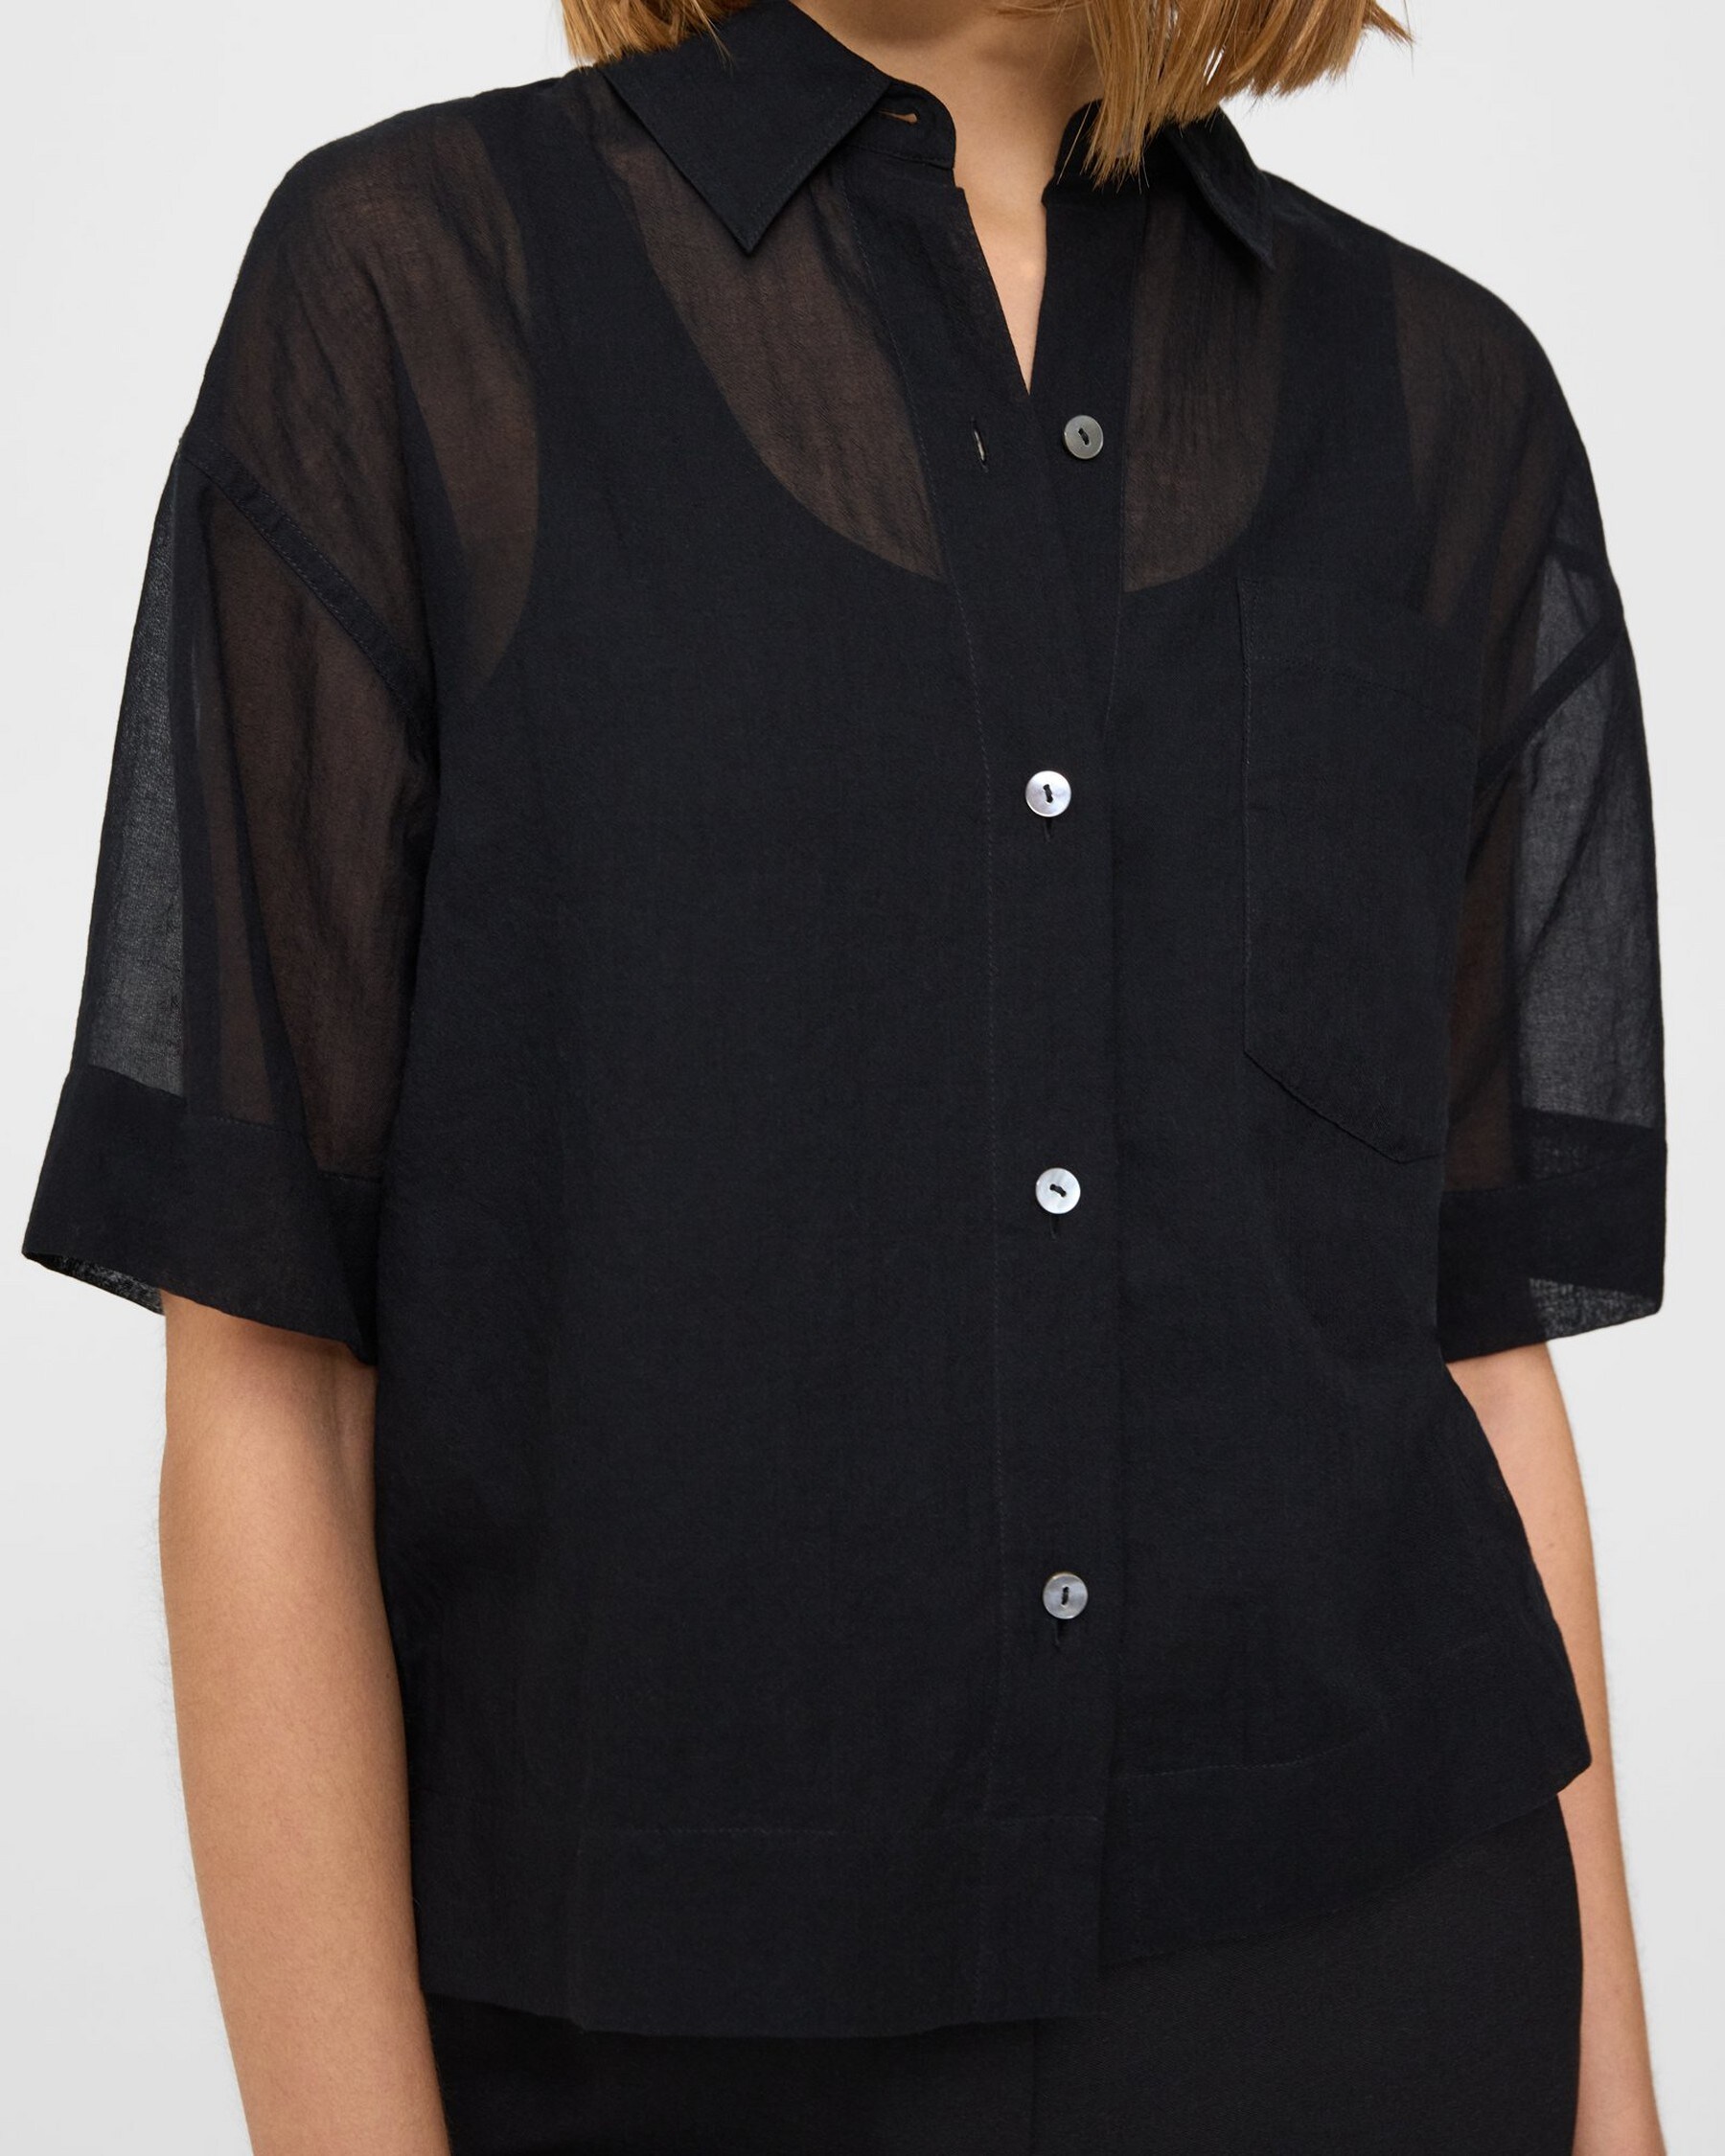 Oversized Short-Sleeve Shirt in Cotton